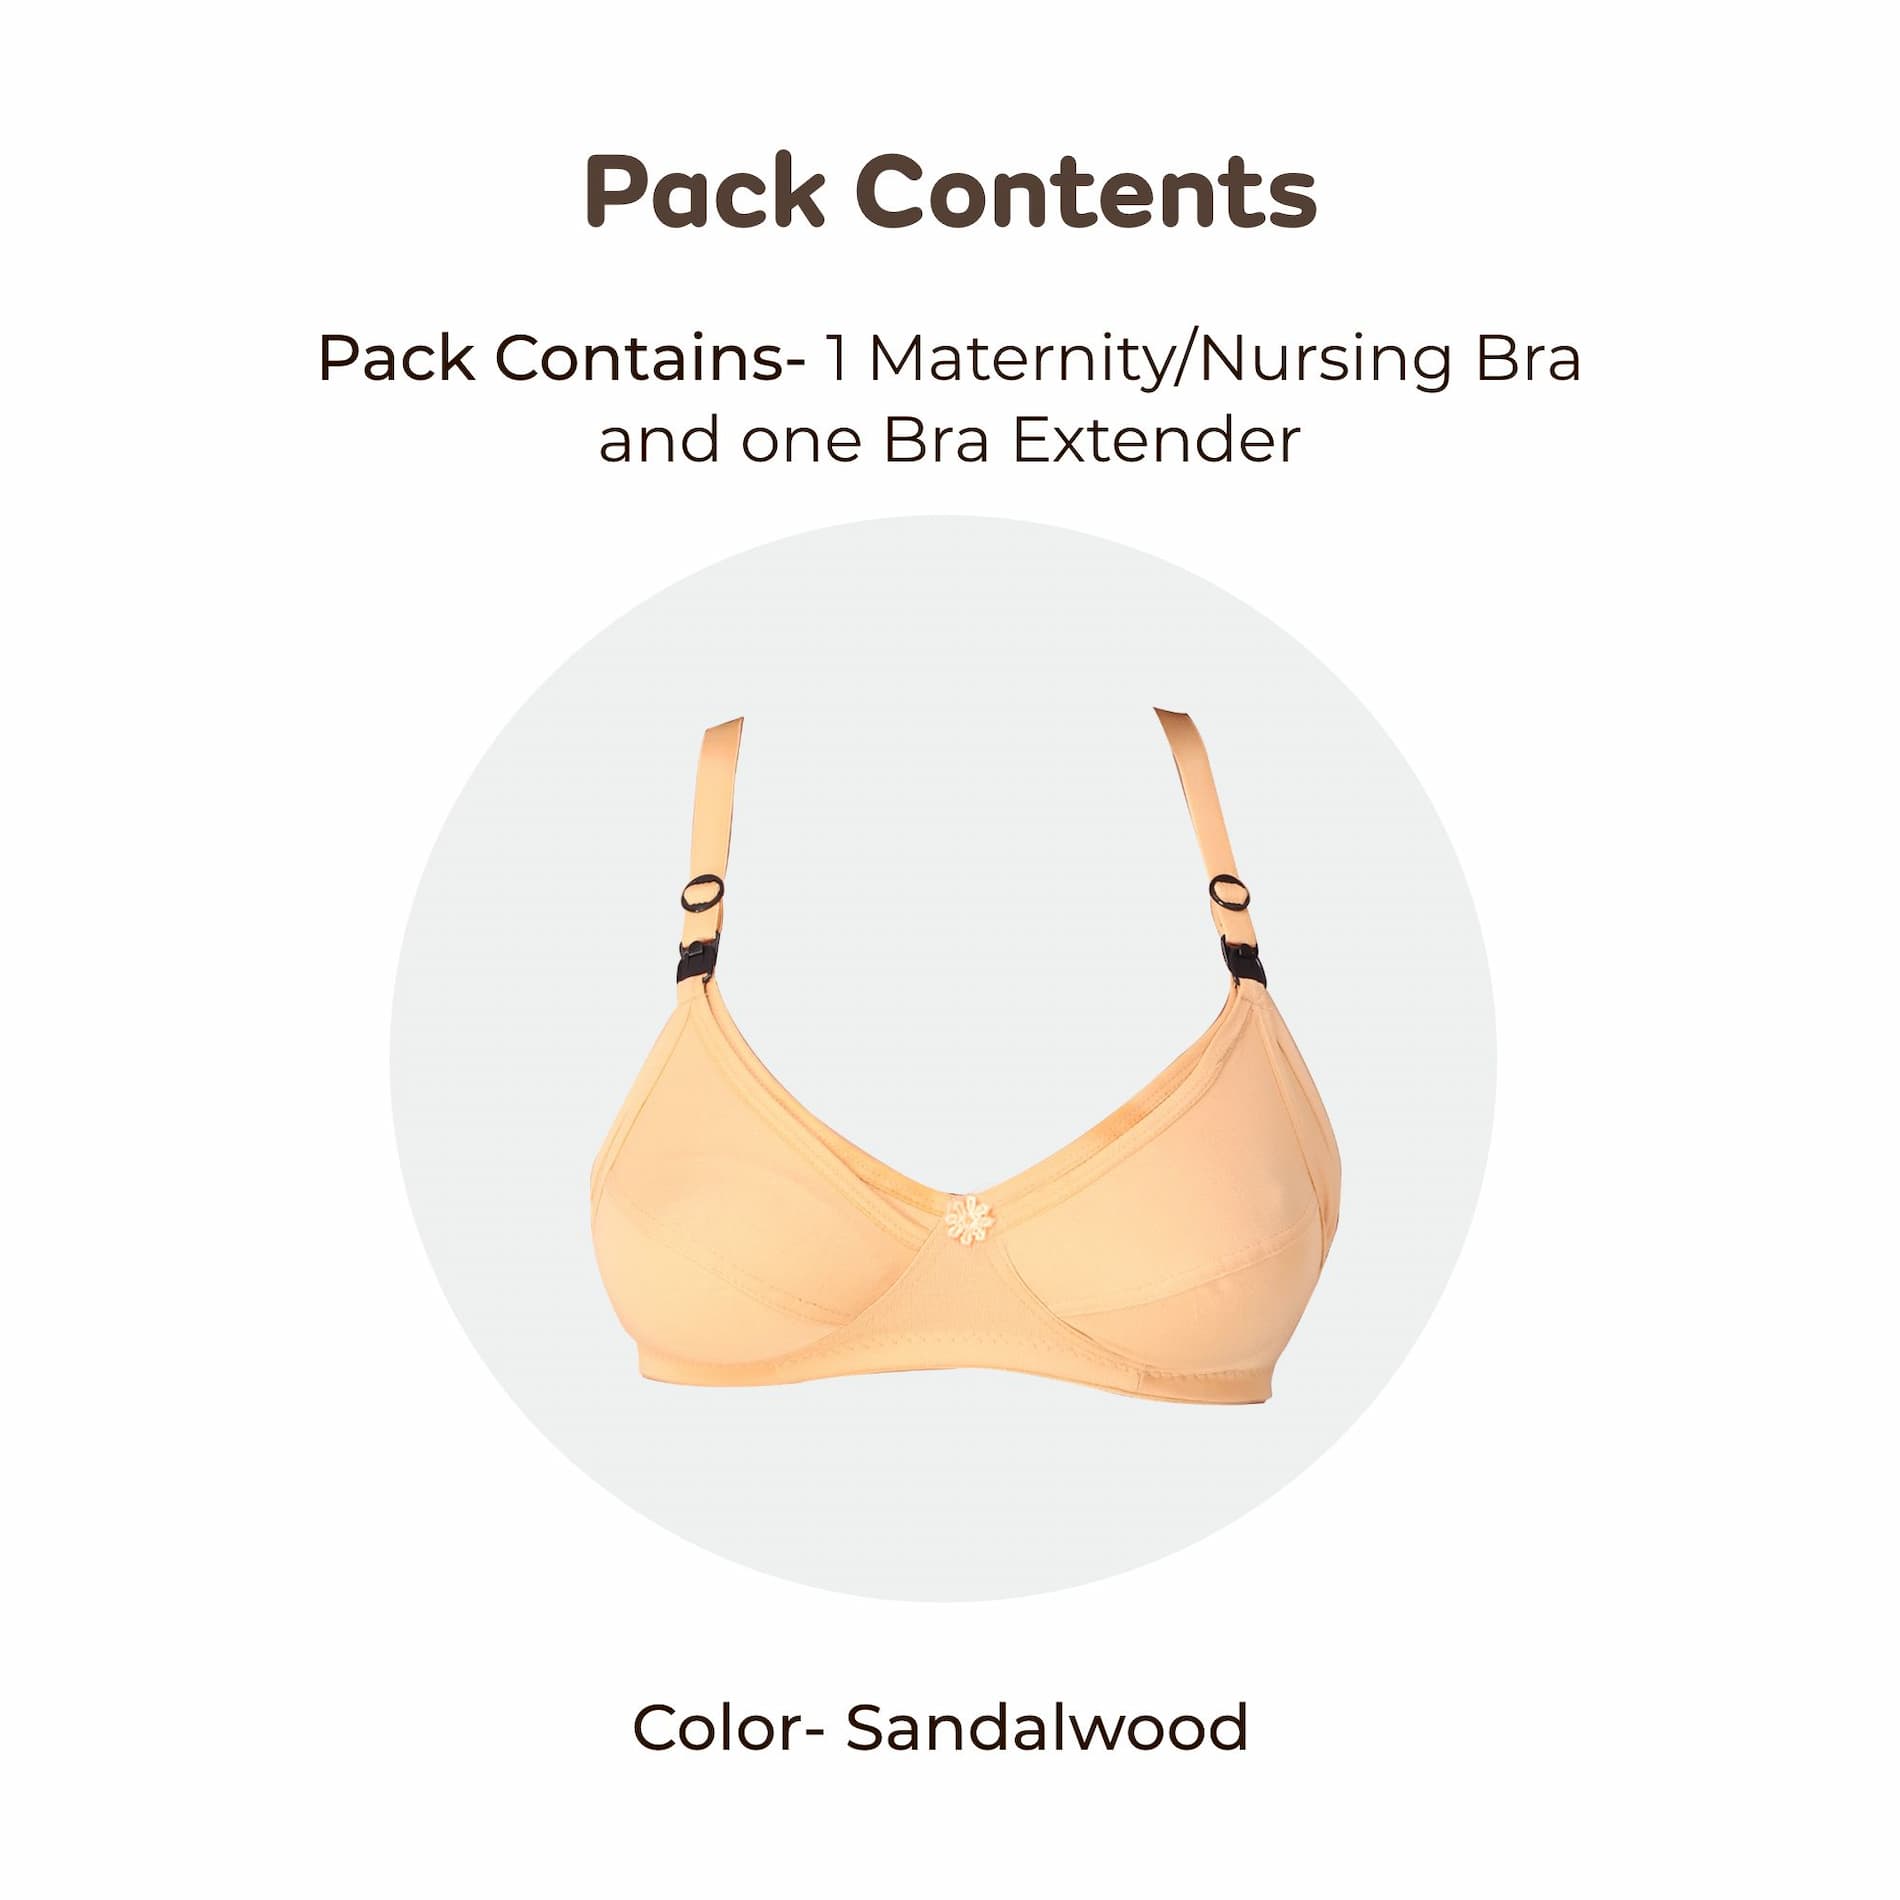 Maternity/Nursing Bras Non-Wired, Non-Padded with free Bra Extender - Sandalwood 34 B 